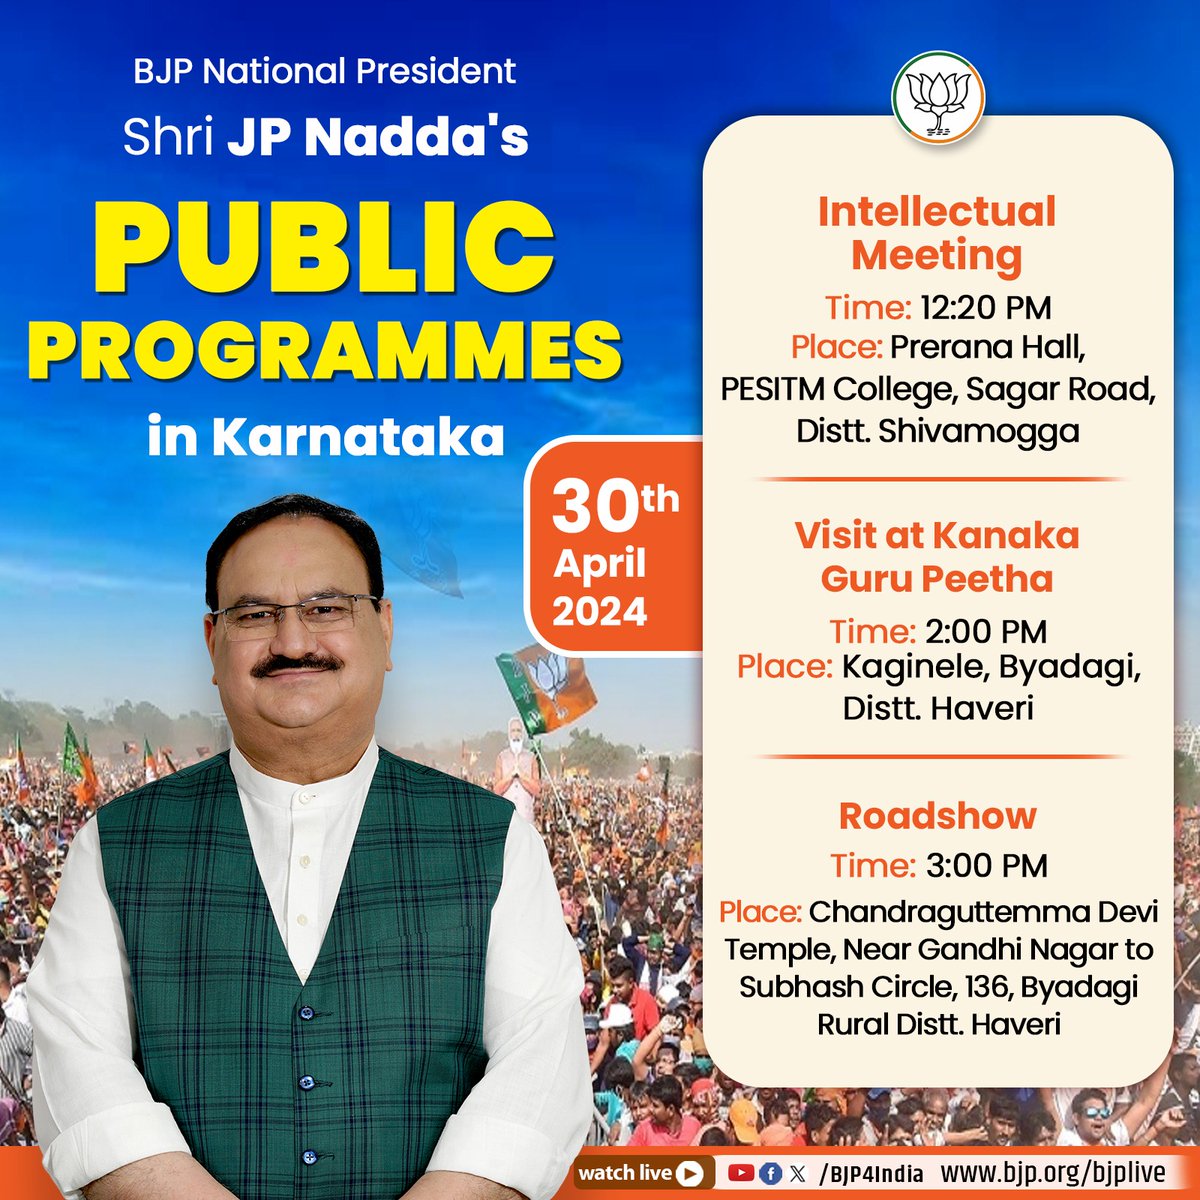 BJP National President Shri @JPNadda's public programmes in Karnataka on 30th April 2024. Watch Live: 📺twitter.com/BJP4India 📺facebook.com/BJP4India 📺youtube.com/BJP4India 📺bjp.org/bjplive